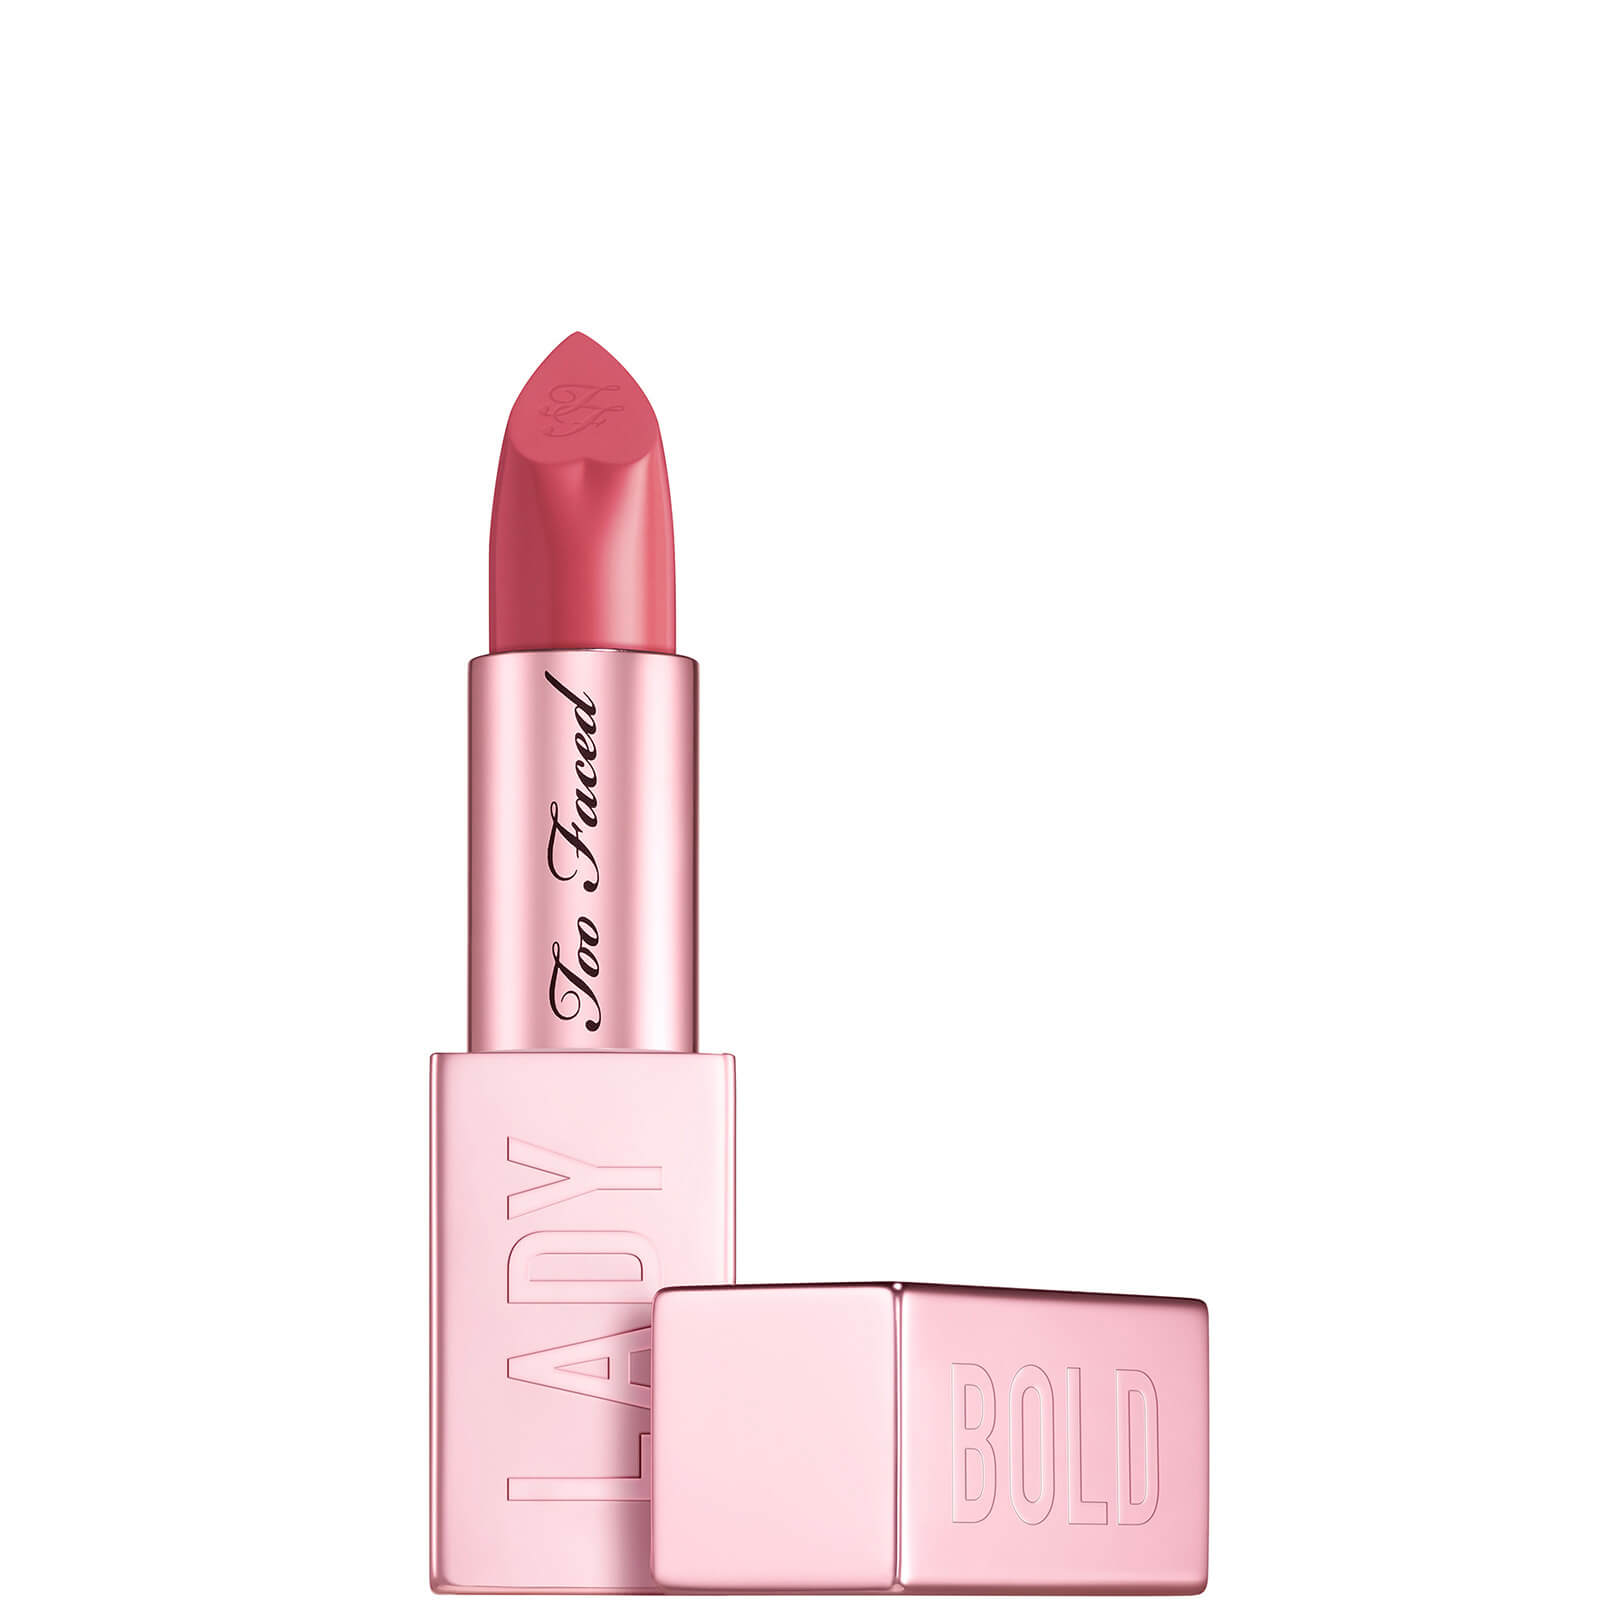 Too Faced Lady Bold Em-Power Pigment Lipstick 4g (Various Shades) - Trailblazer